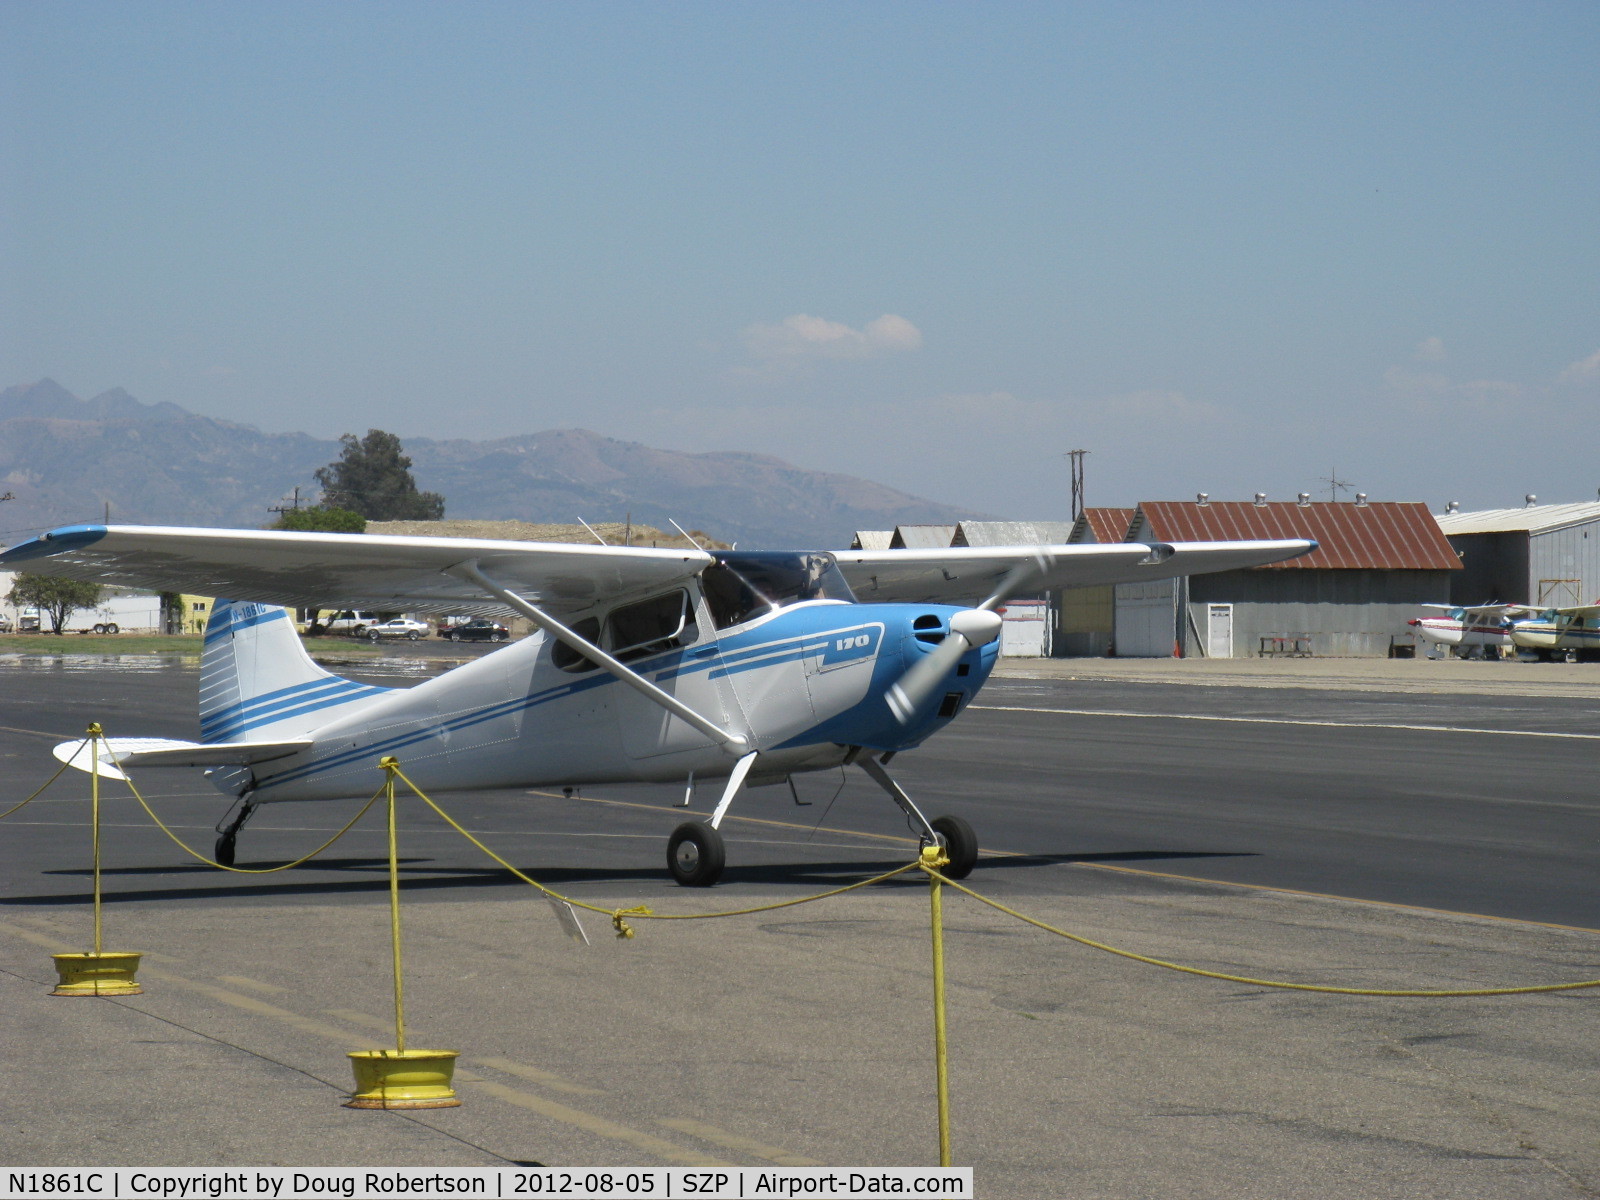 N1861C, 1953 Cessna 170B C/N 26005, 1953 Cessna 170B, Continental C145 145 Hp, classic beauty, taxi